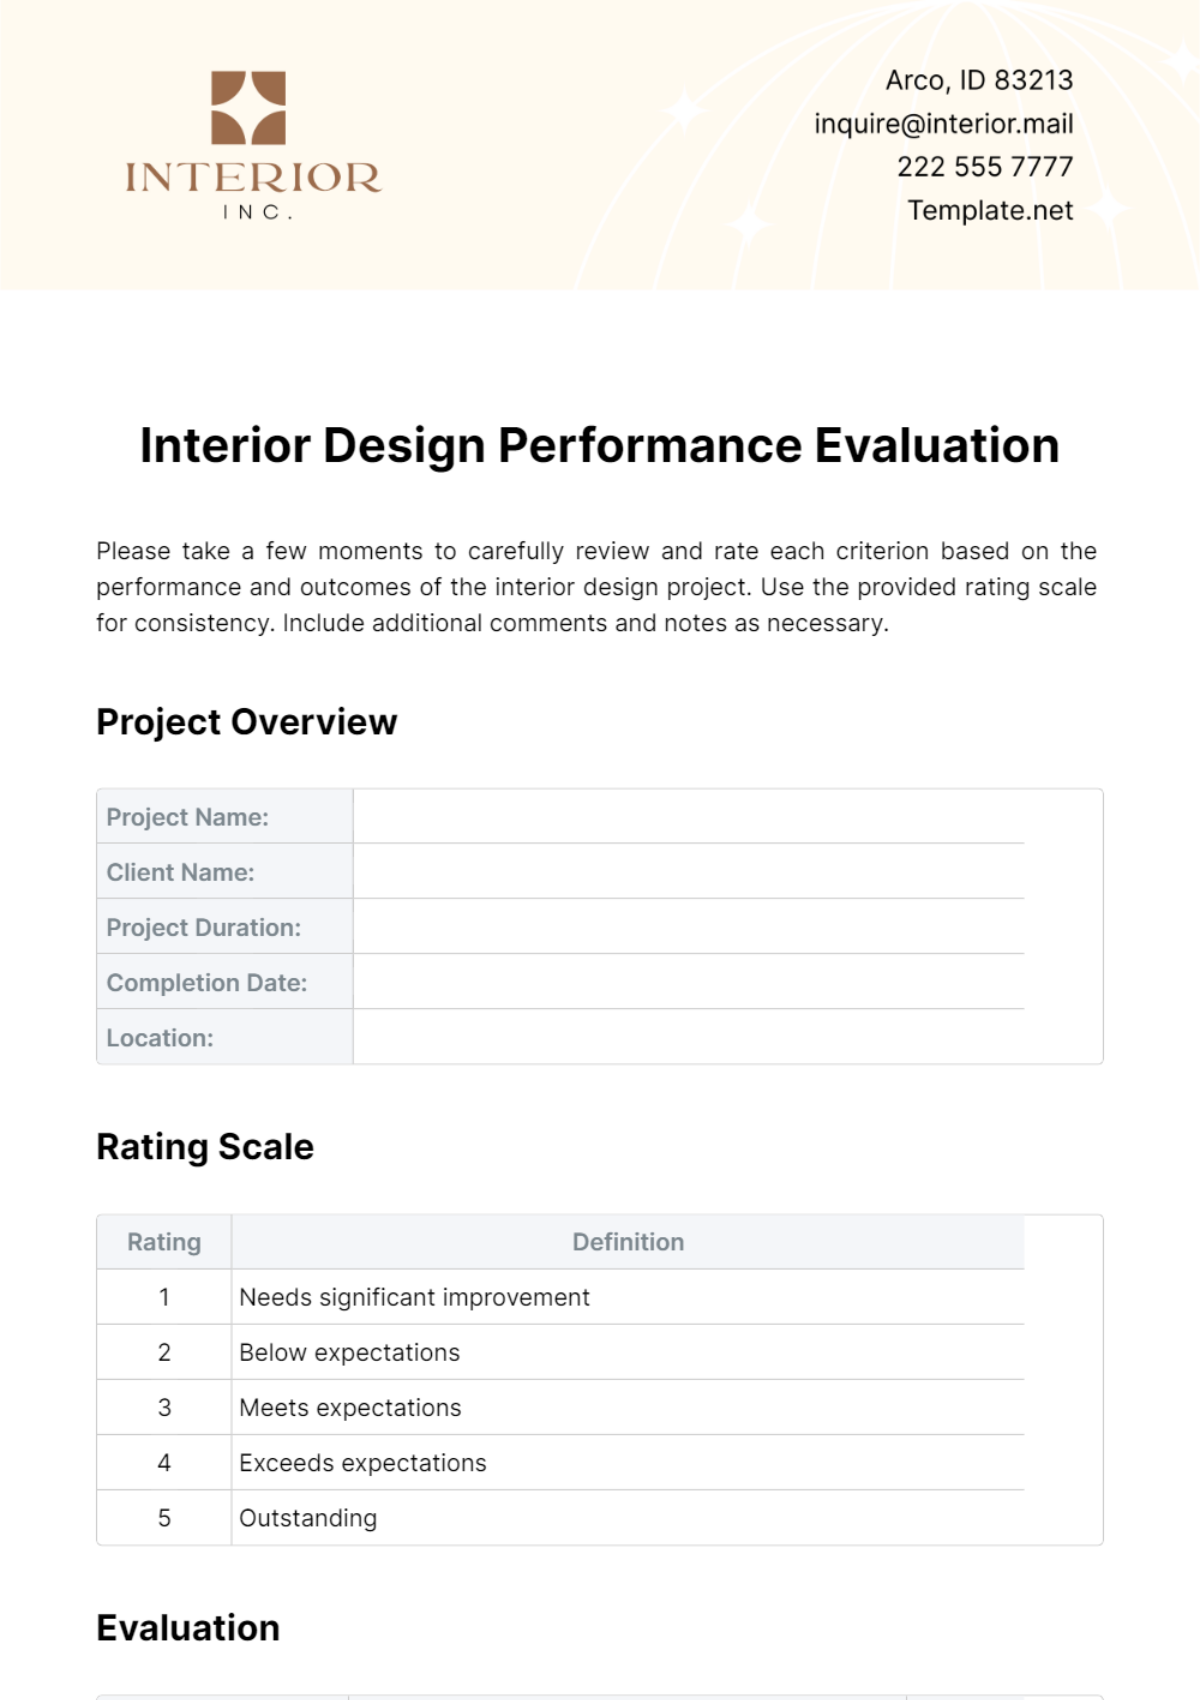 Interior Design Performance Evaluation Template